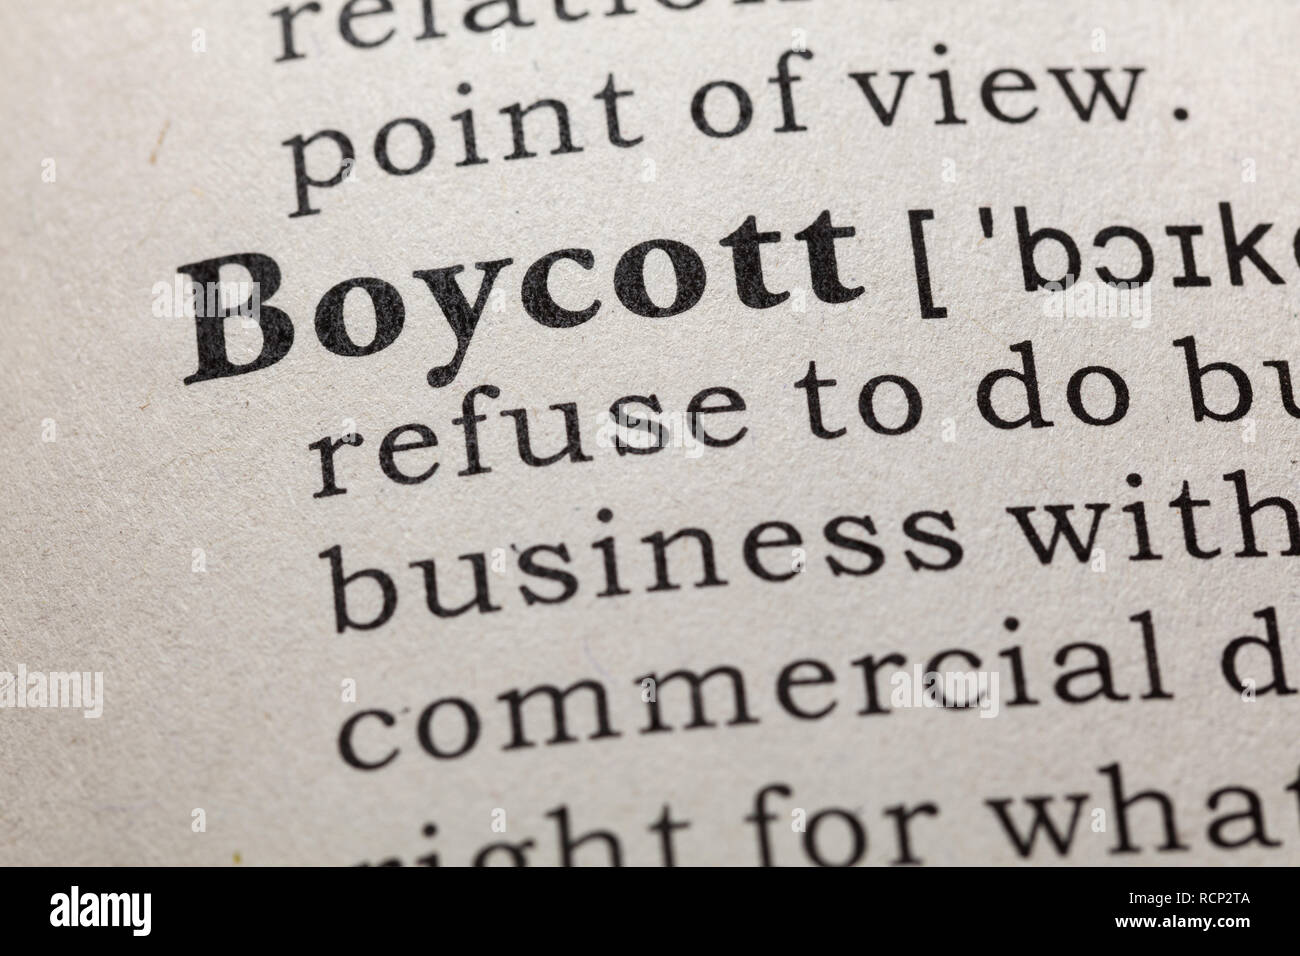 Fake Dictionary, Dictionary definition of the word boycott. including key descriptive words. Stock Photo